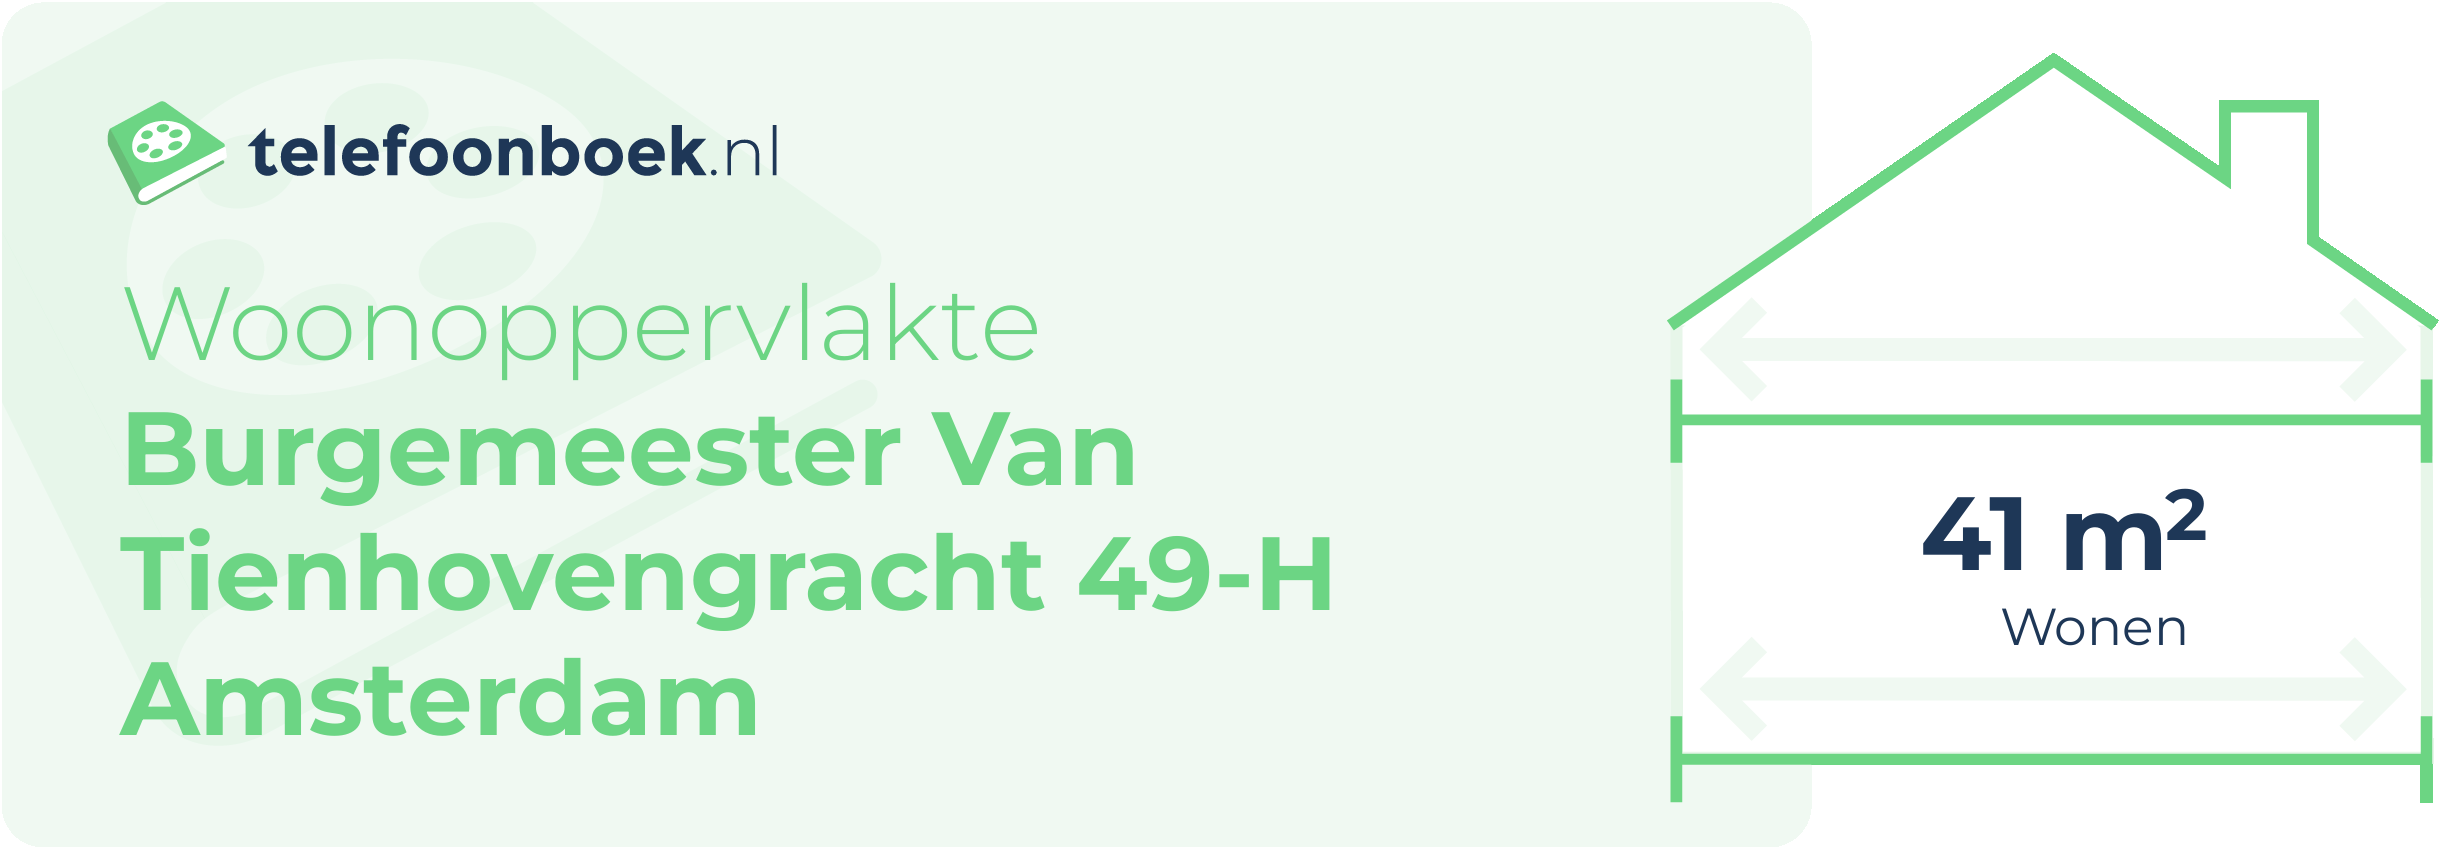 Woonoppervlakte Burgemeester Van Tienhovengracht 49-H Amsterdam